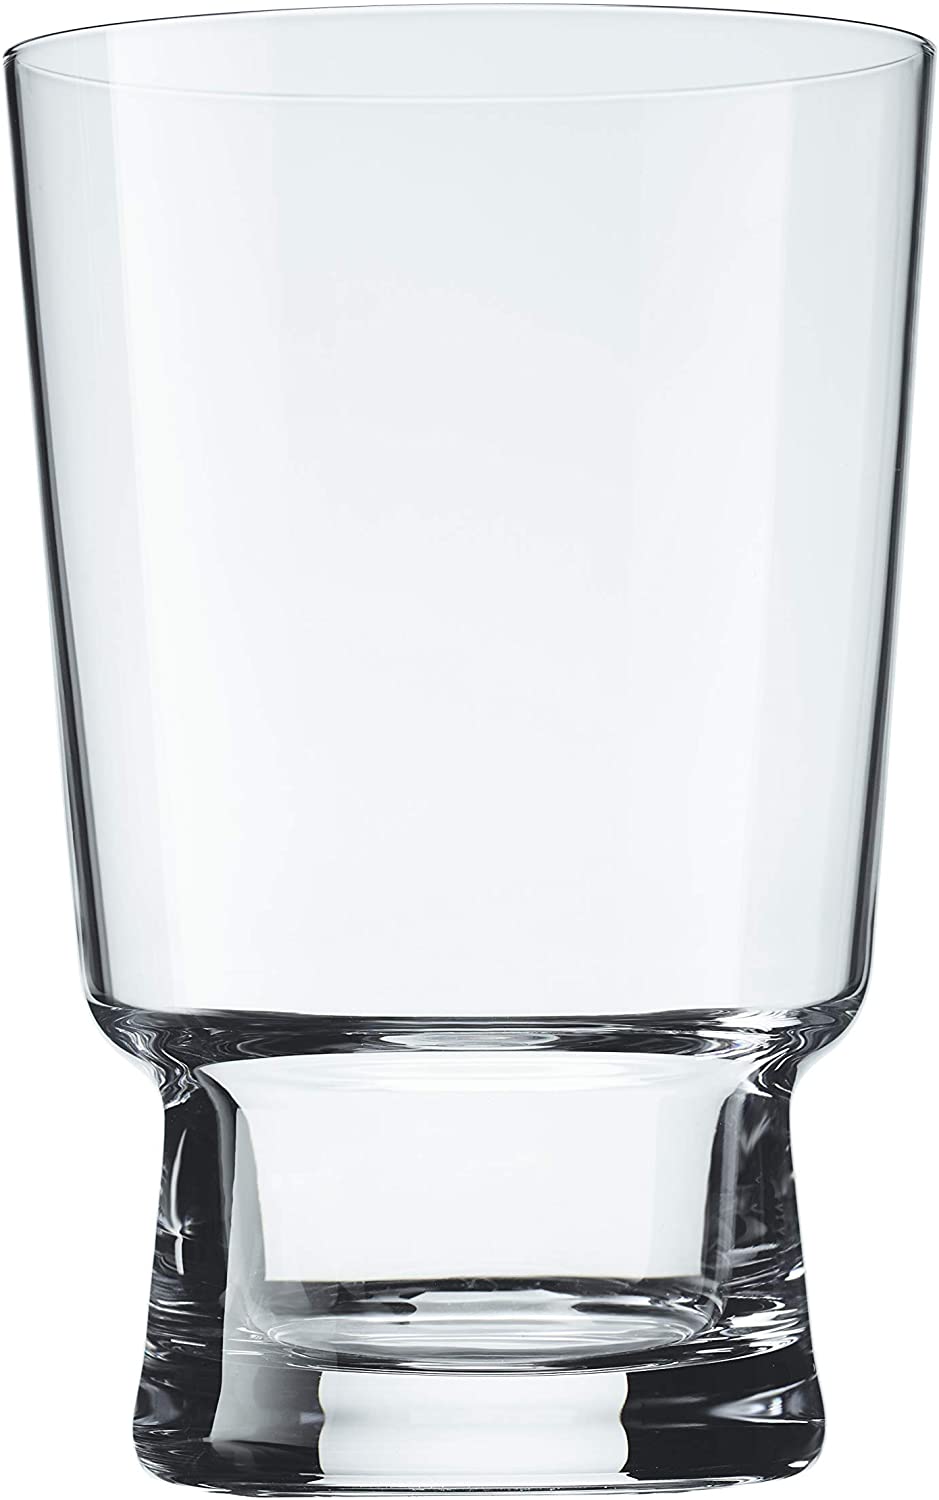 Schott Zwiesel - Glass/universal glass/drinking glass - Tower Universal - 456 ml - 1 piece